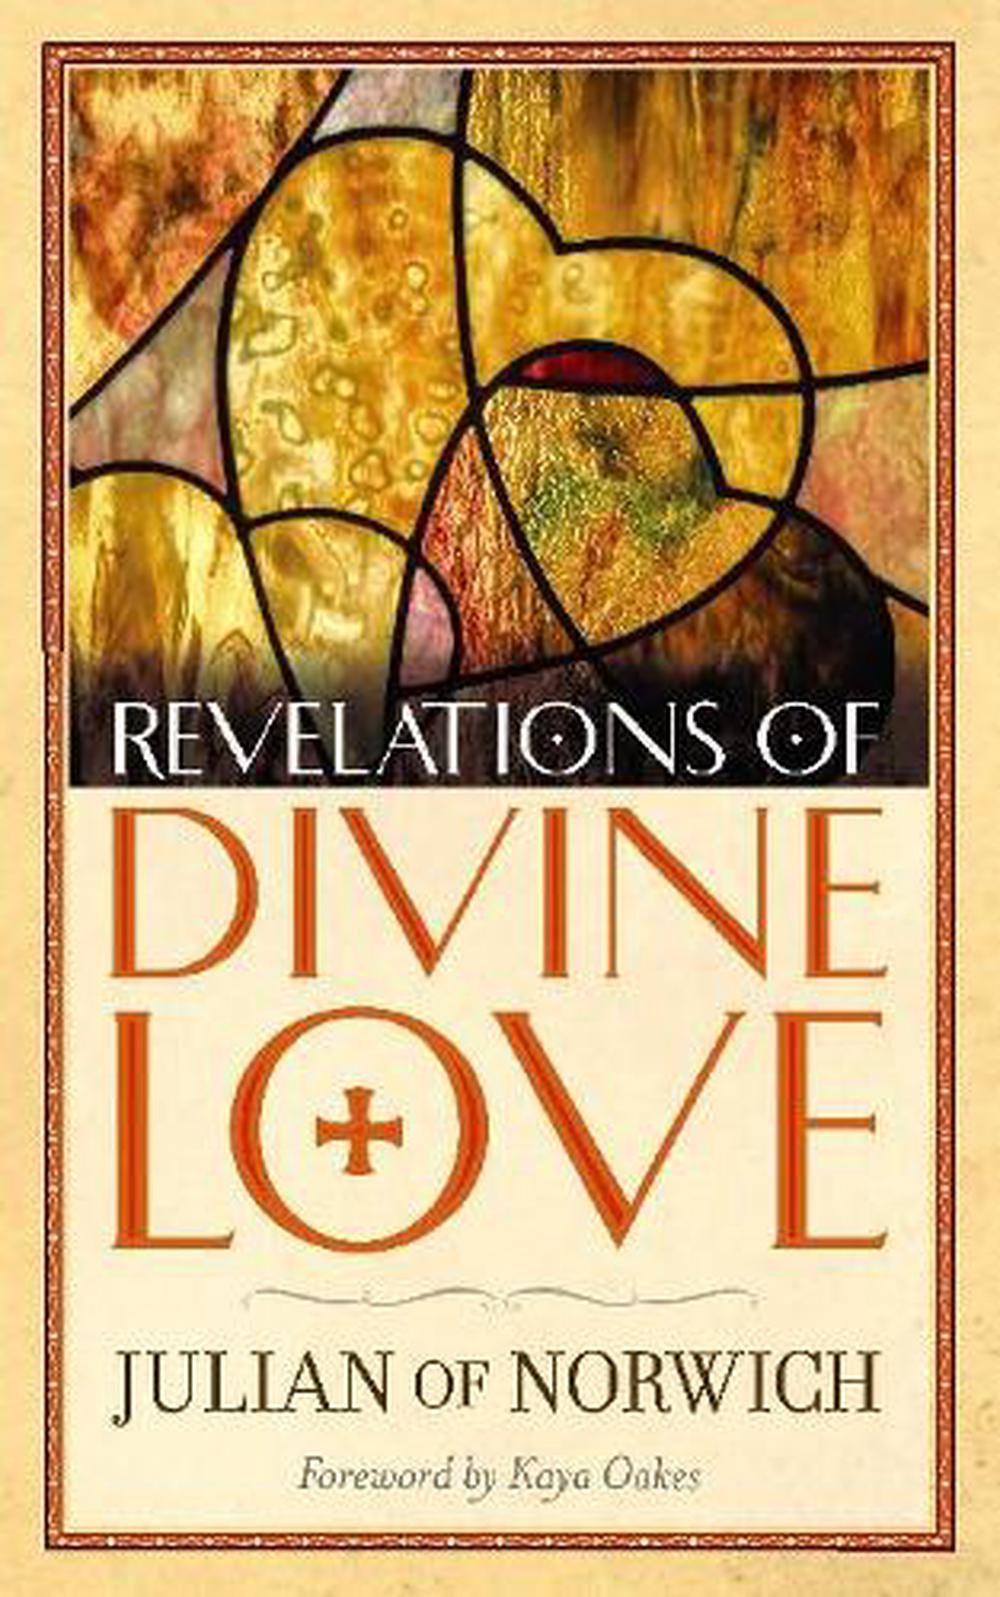 revelations of divine love best translation